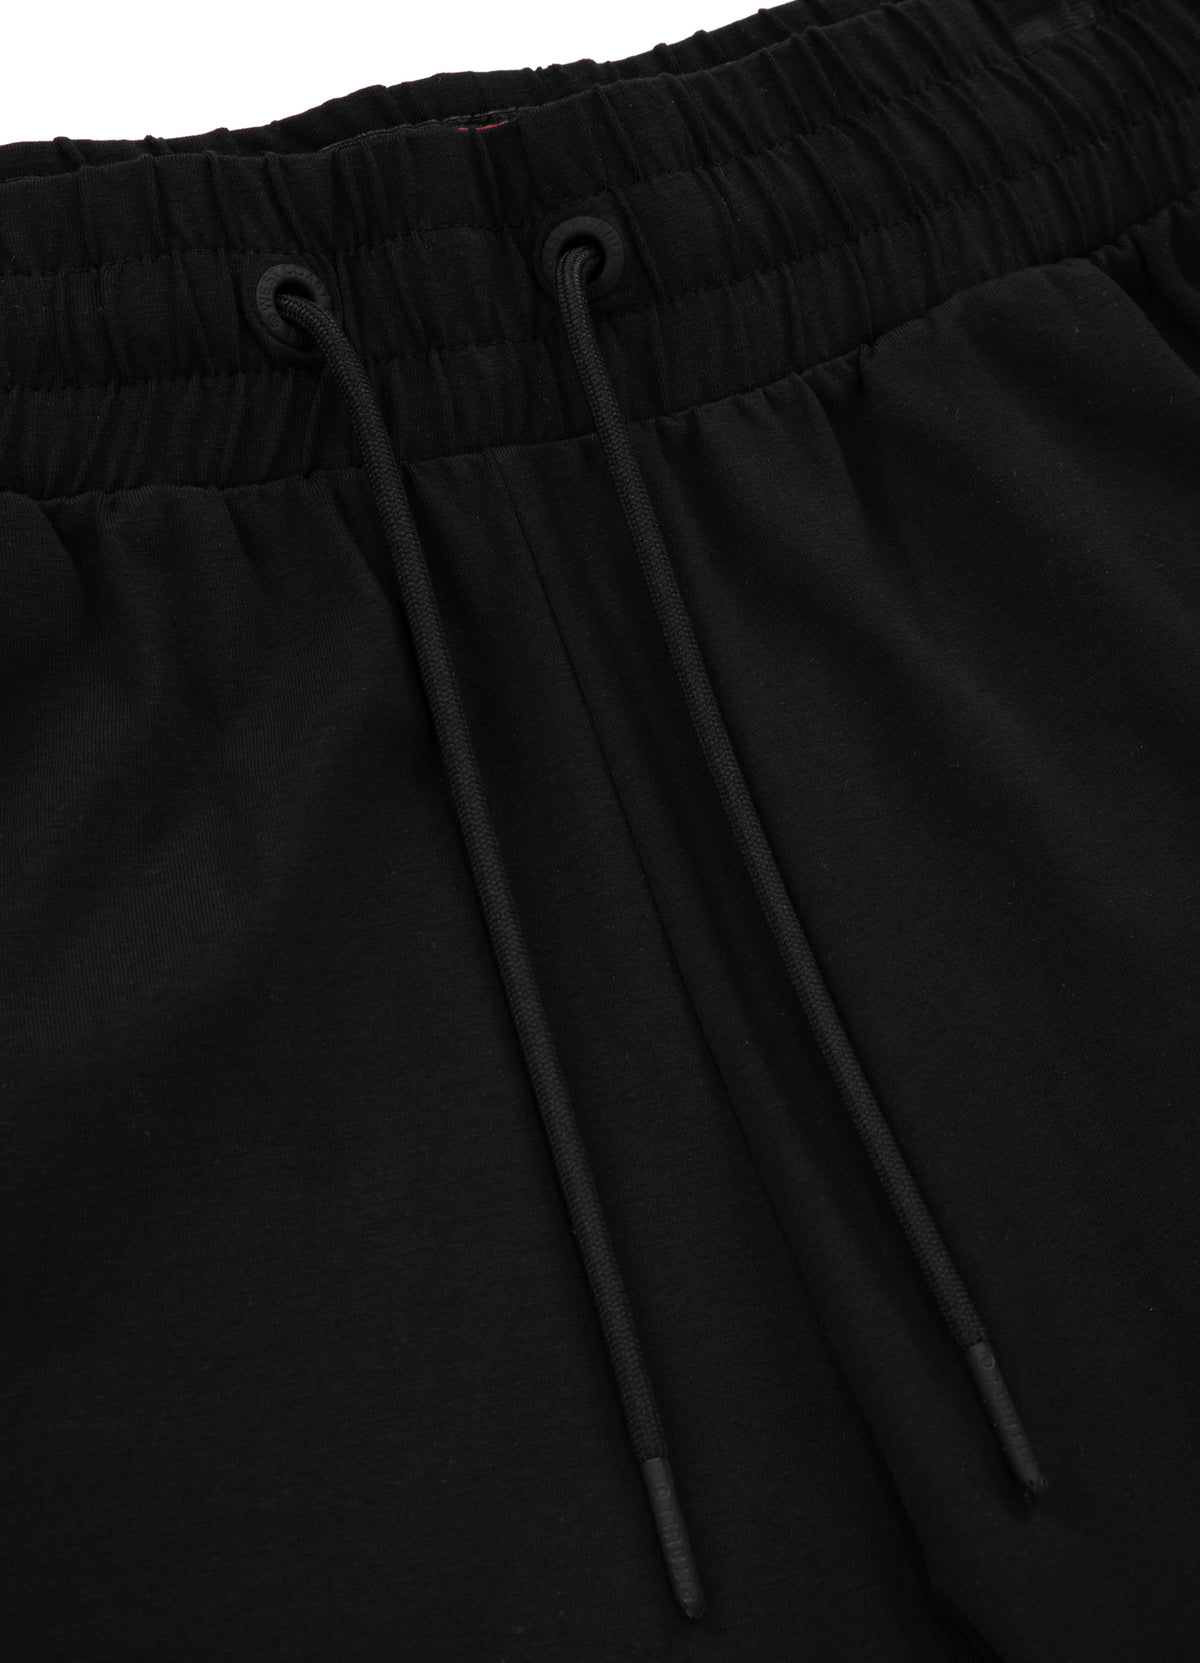 TARENTO 210 Black Jogging Pants